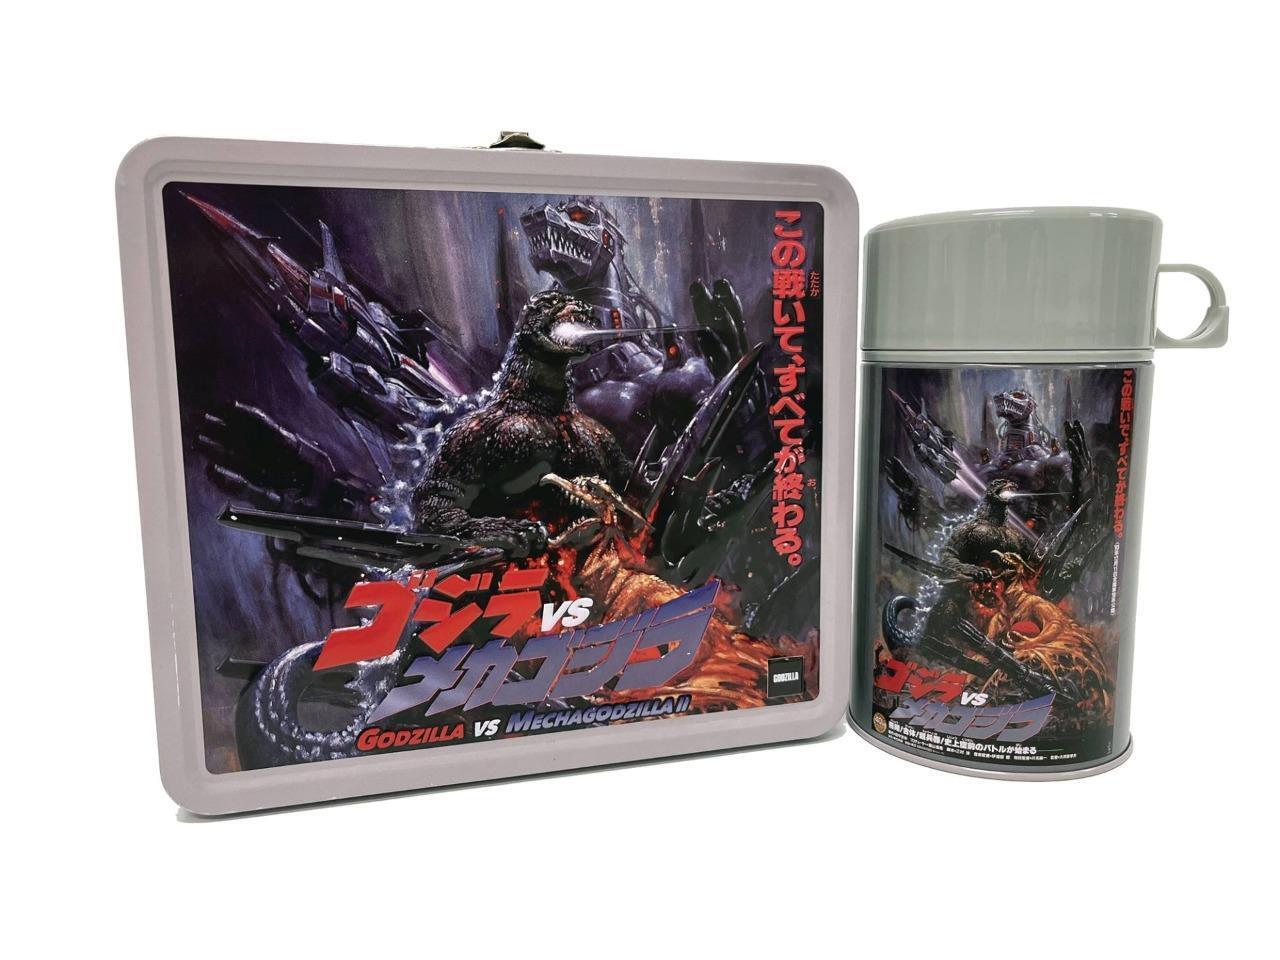 Tin Titans Godzilla vs Mechagodzilla PX Lunchbox & Beverage Container